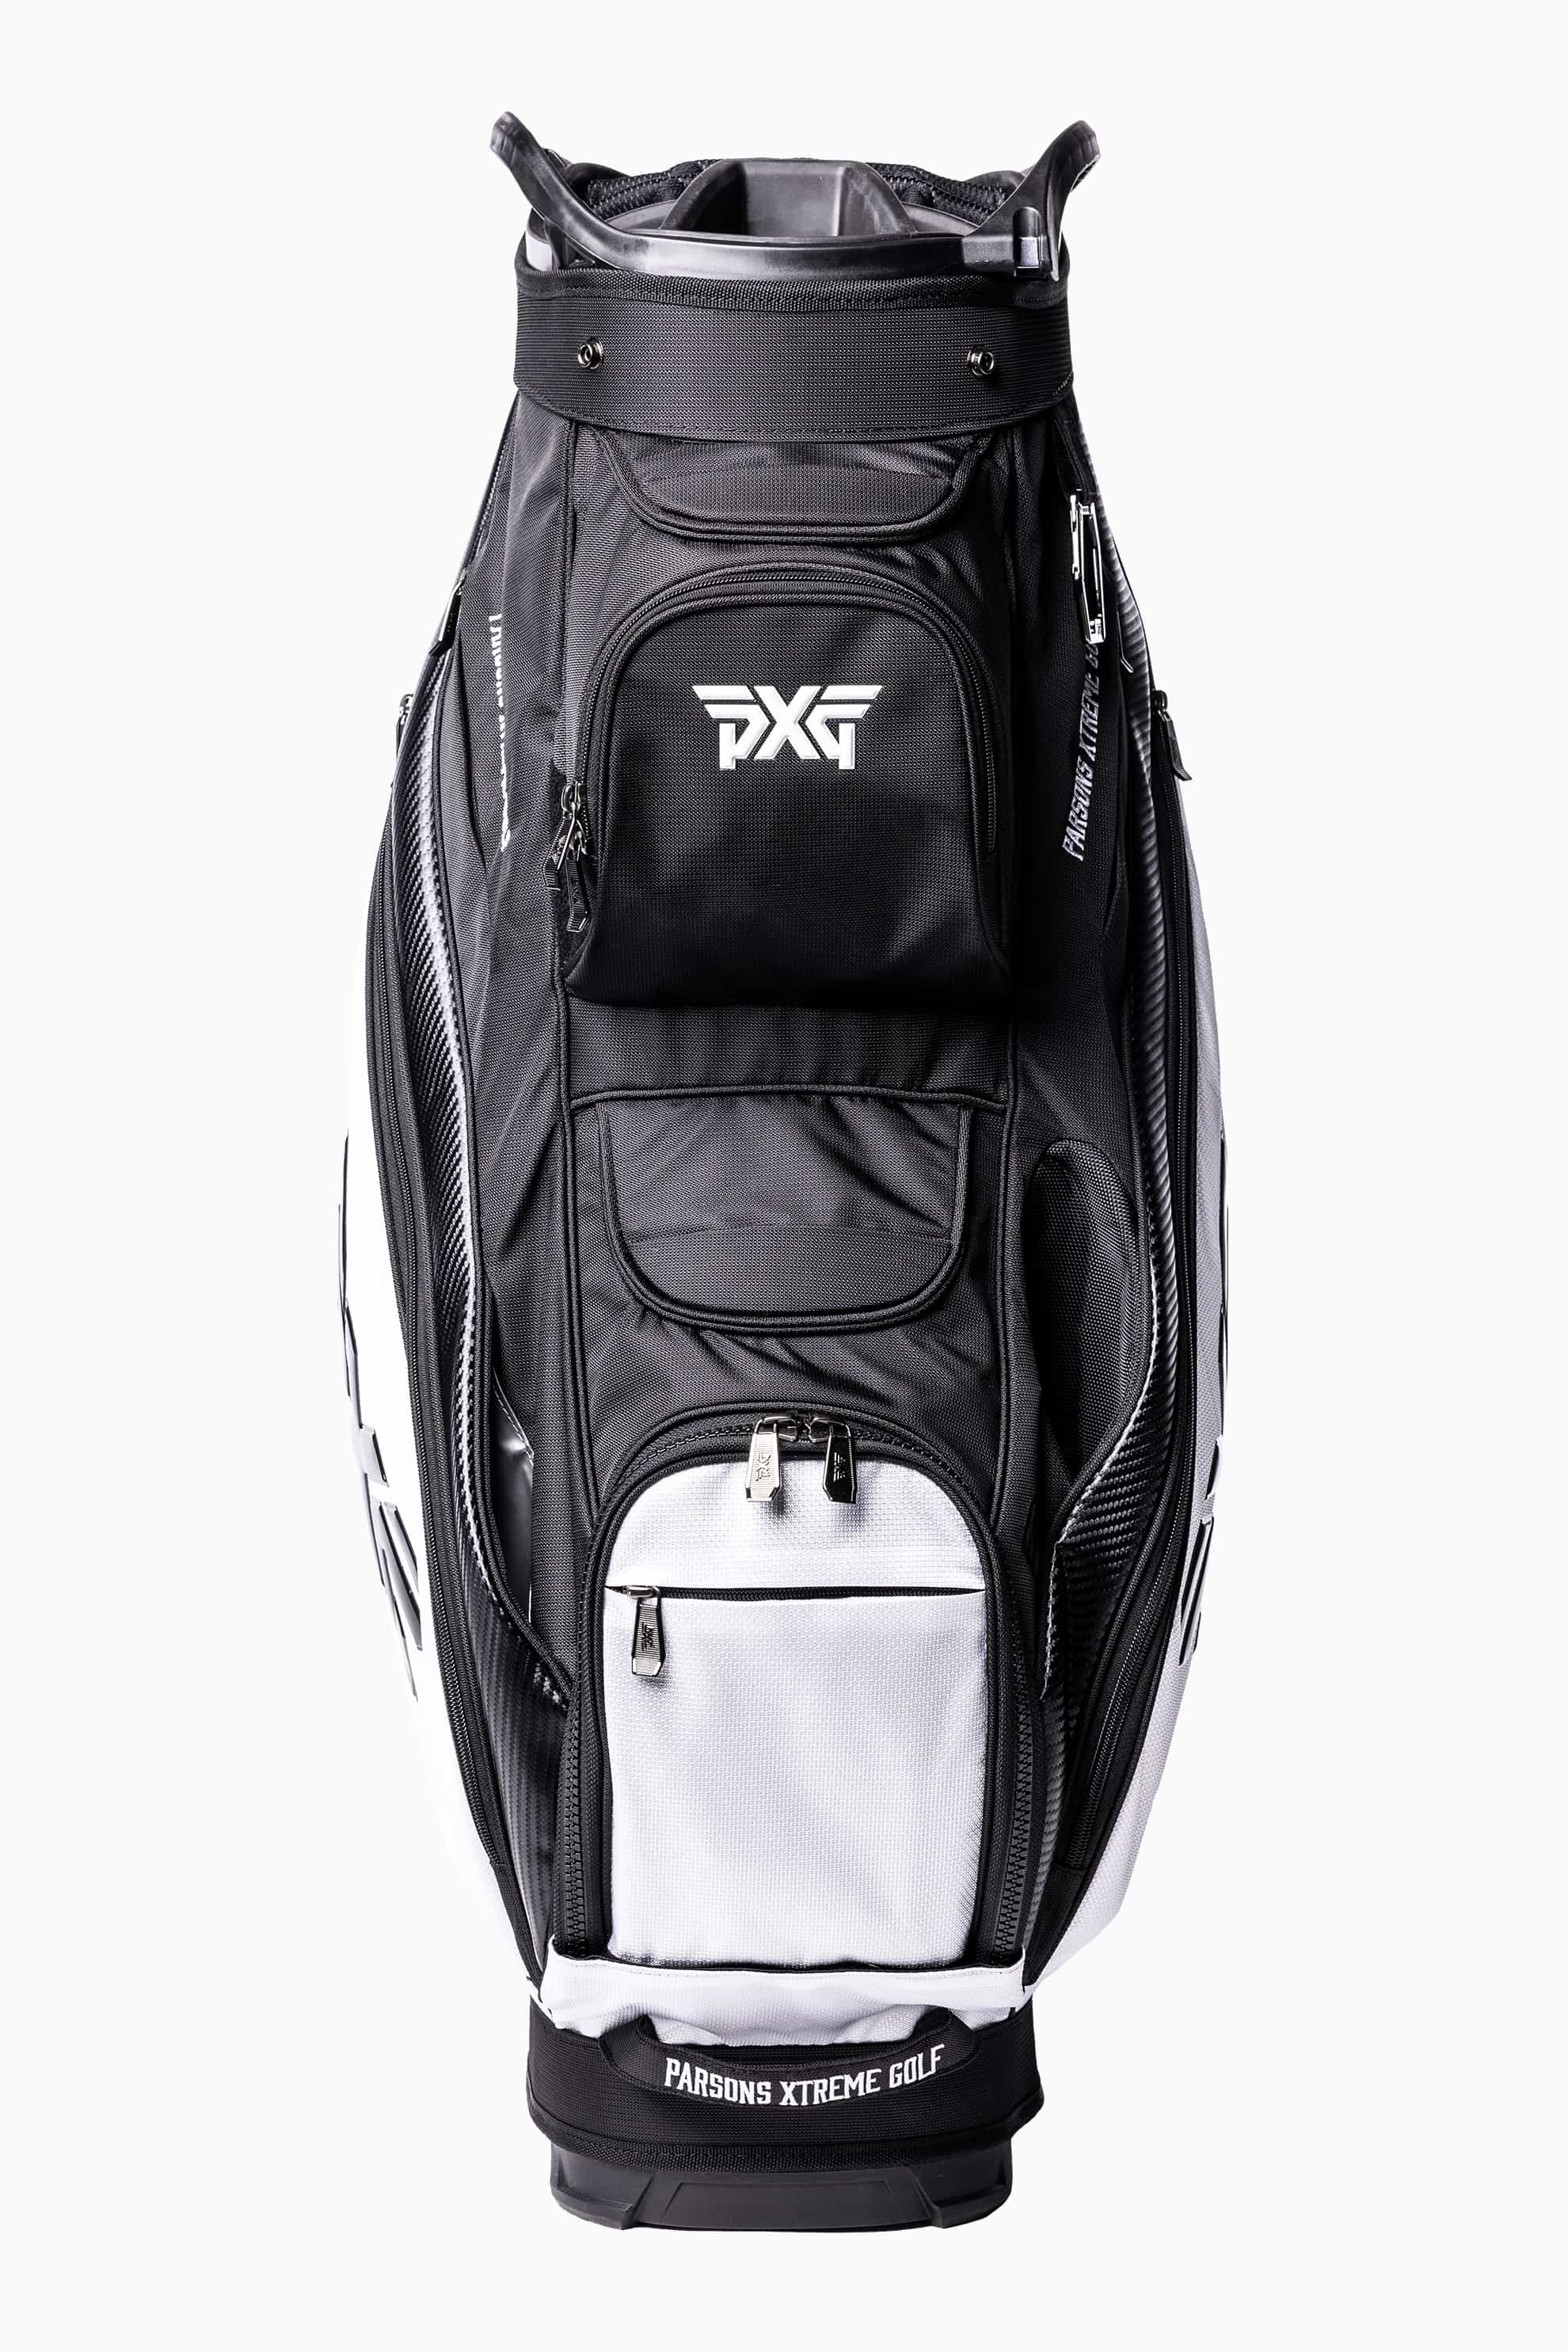 Buy Lightweight Cart Bag | PXG